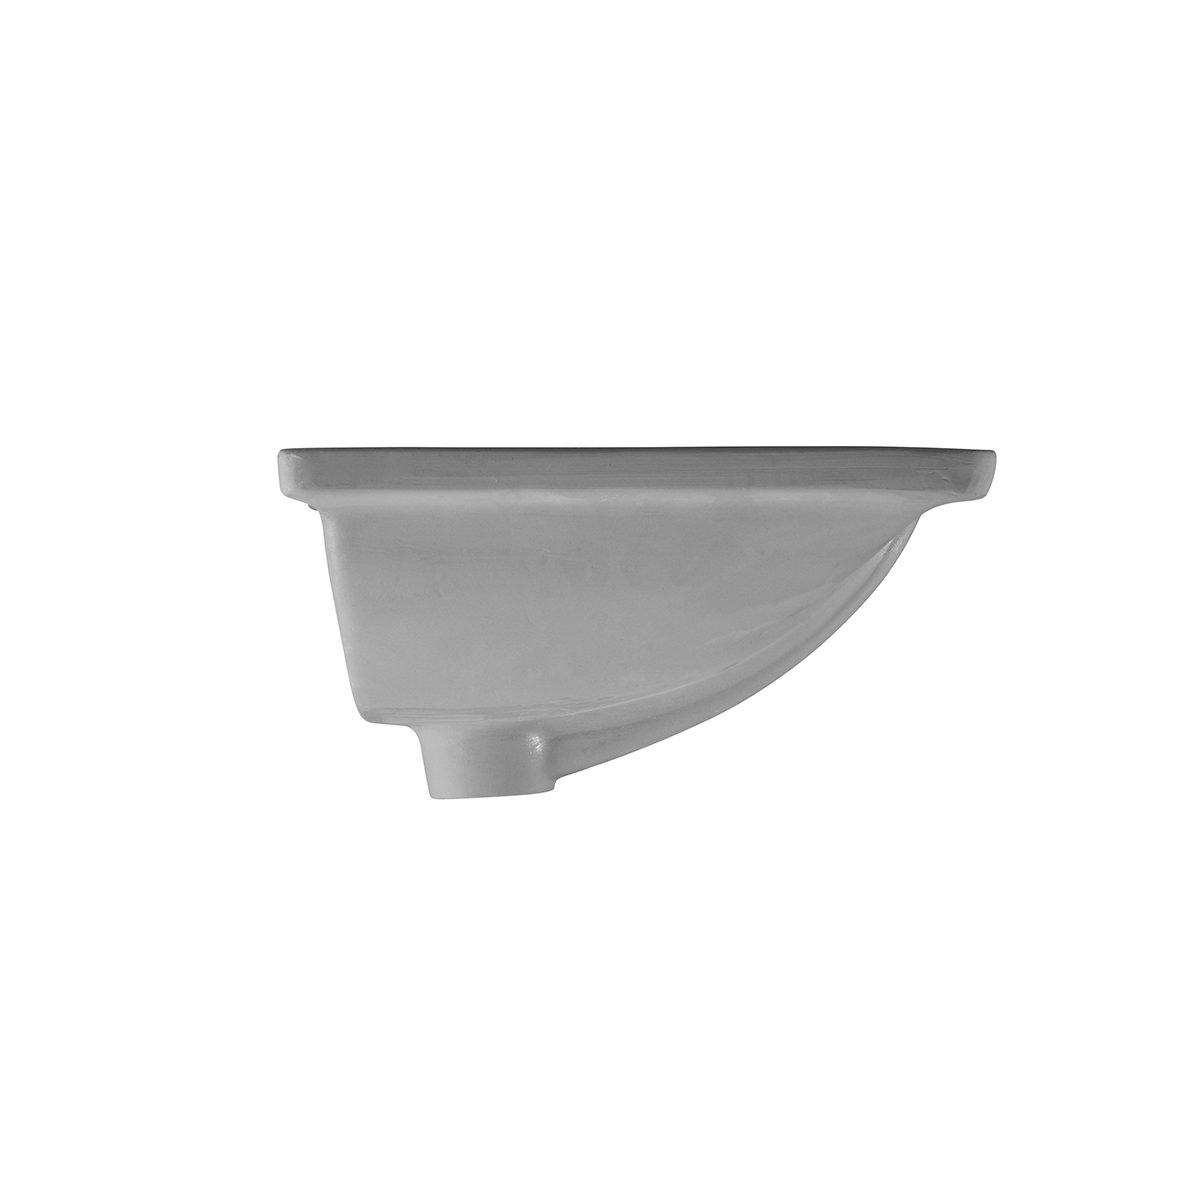 DAX Ceramic Square Undermount Bathroom Basin - 18"x13" (BSN-202M-W)